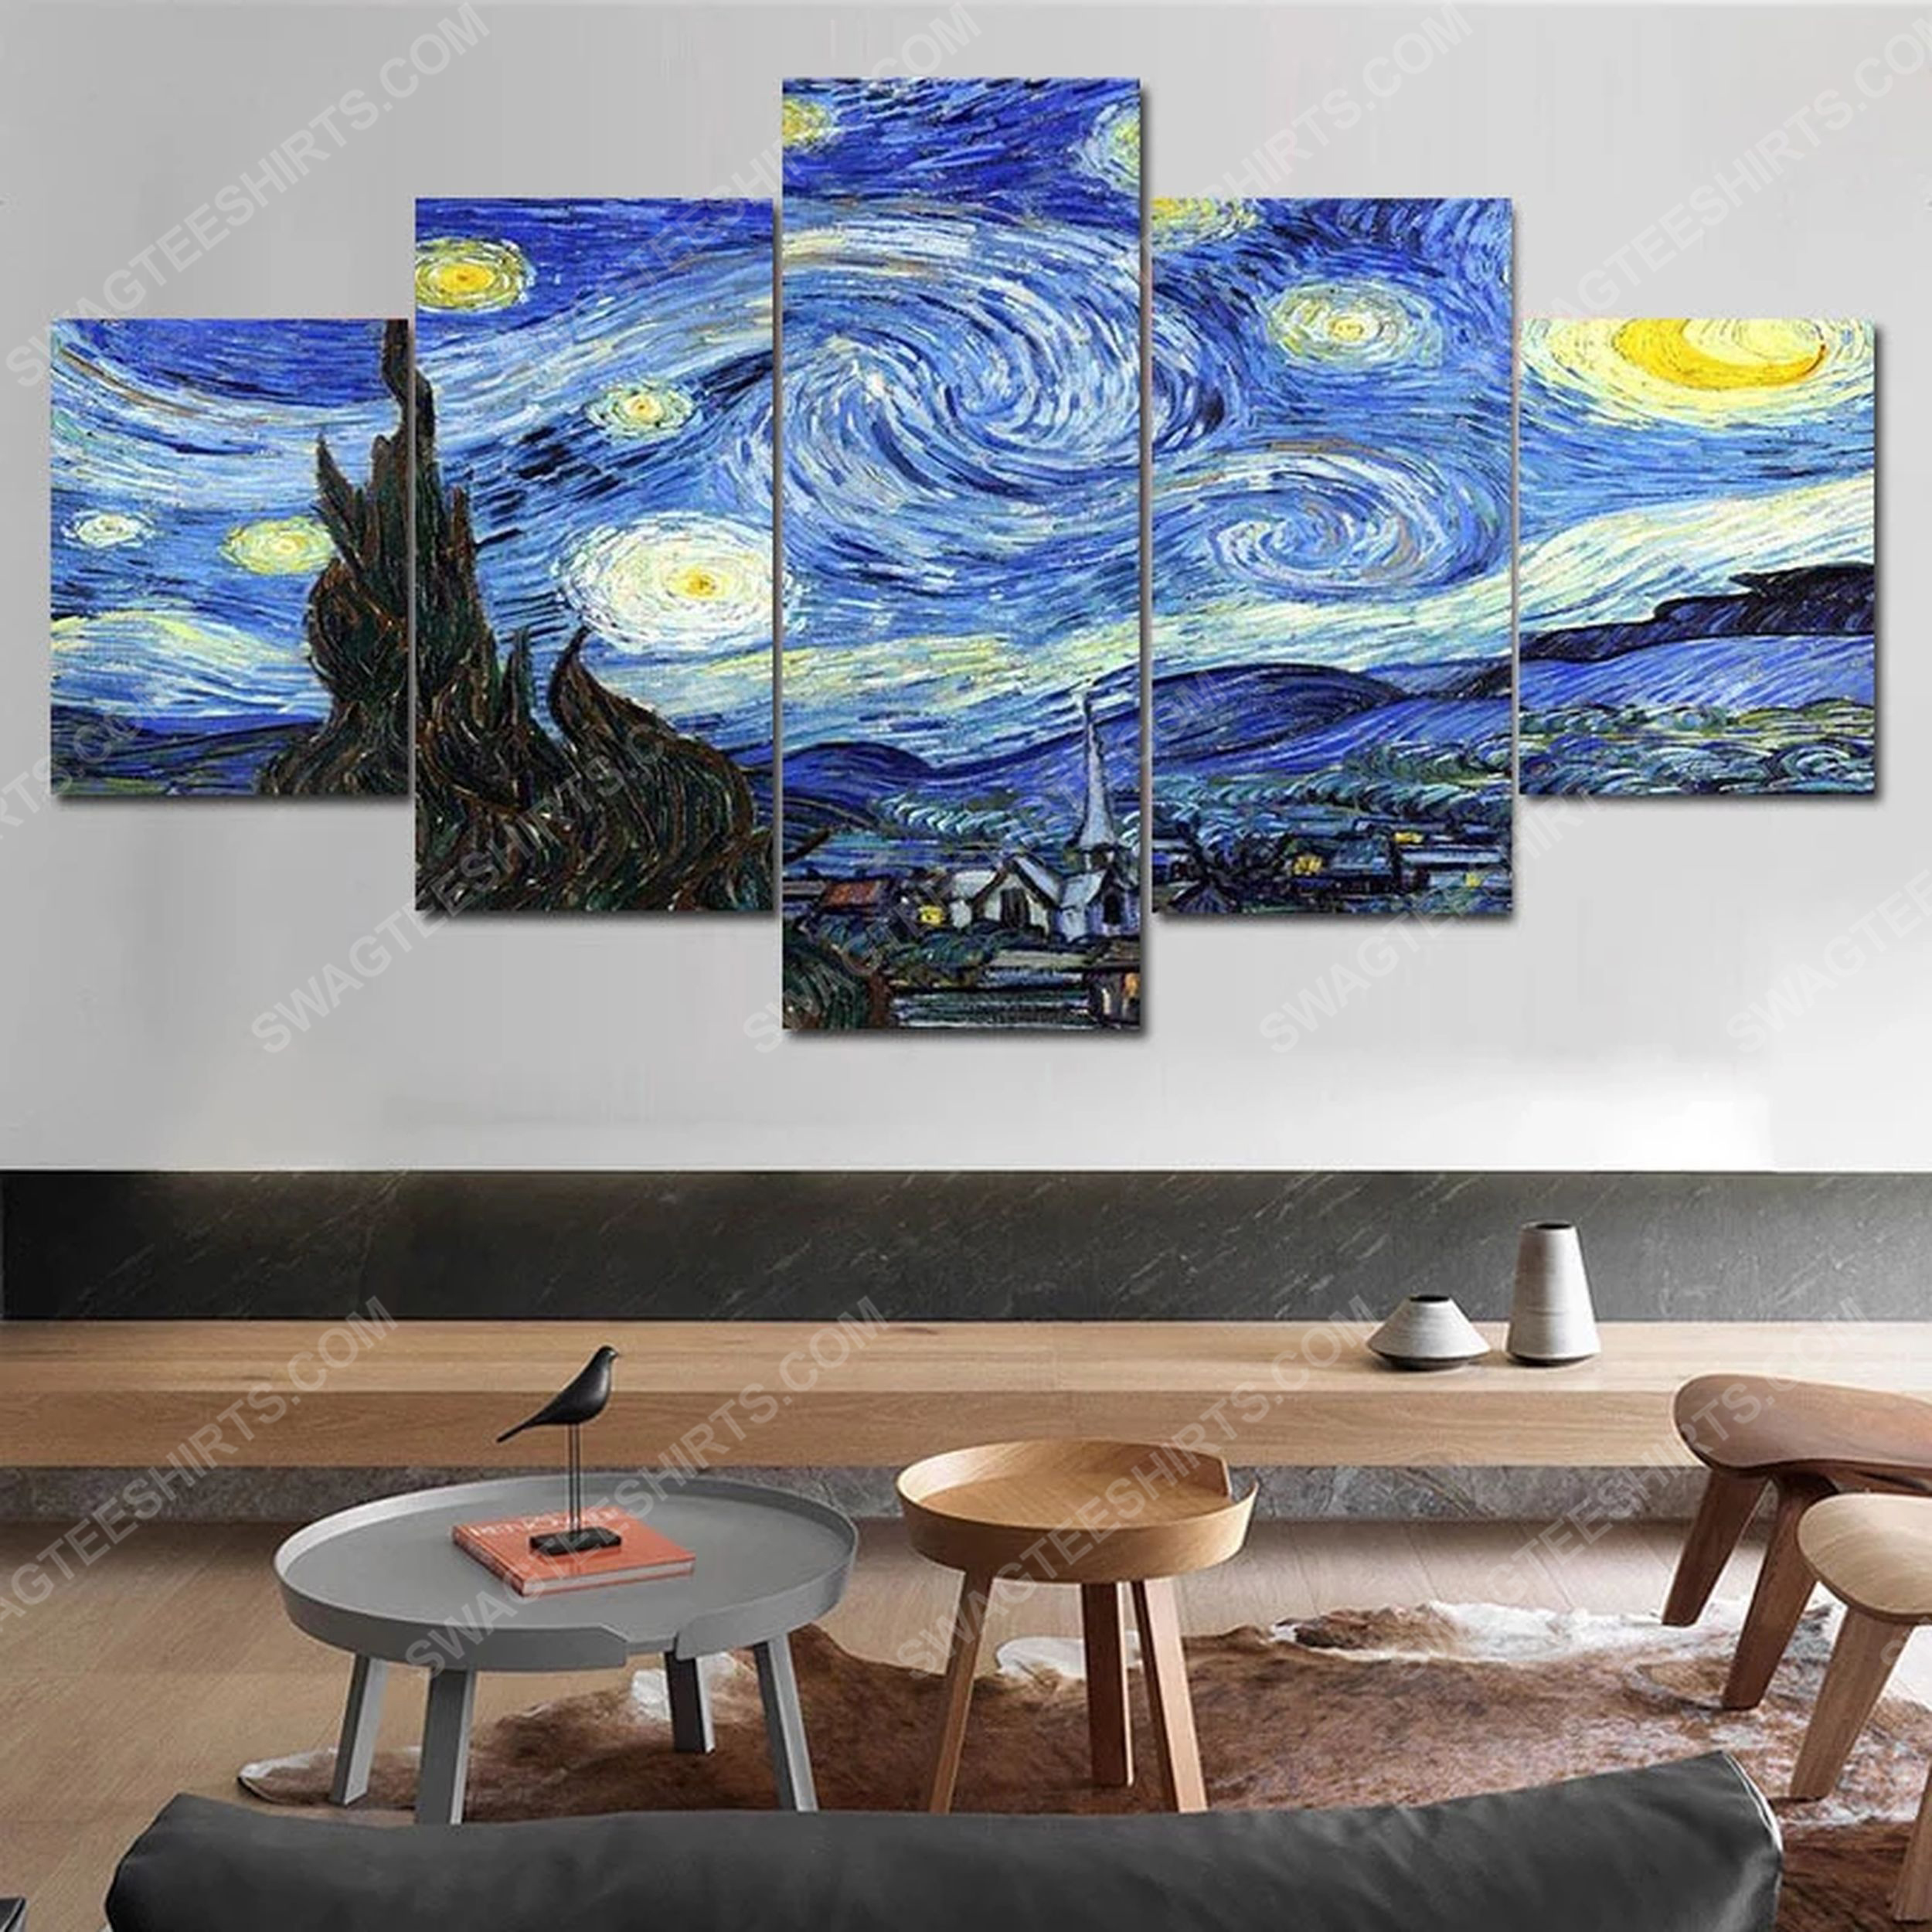 Vincent van gogh starry night print painting canvas wall art home decor